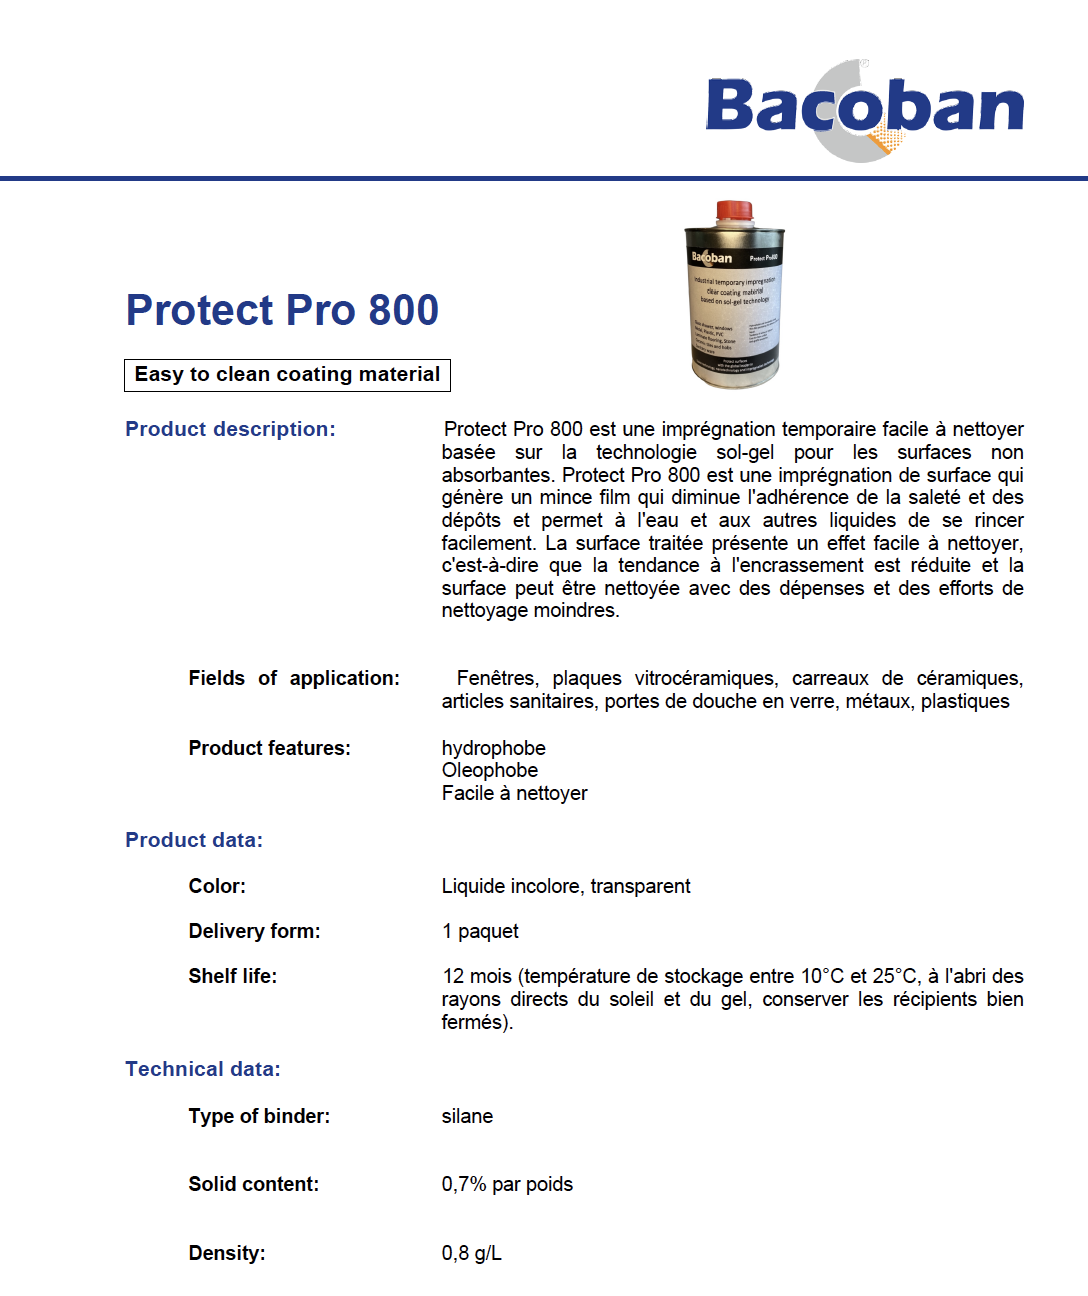 Protect Pro 400 details